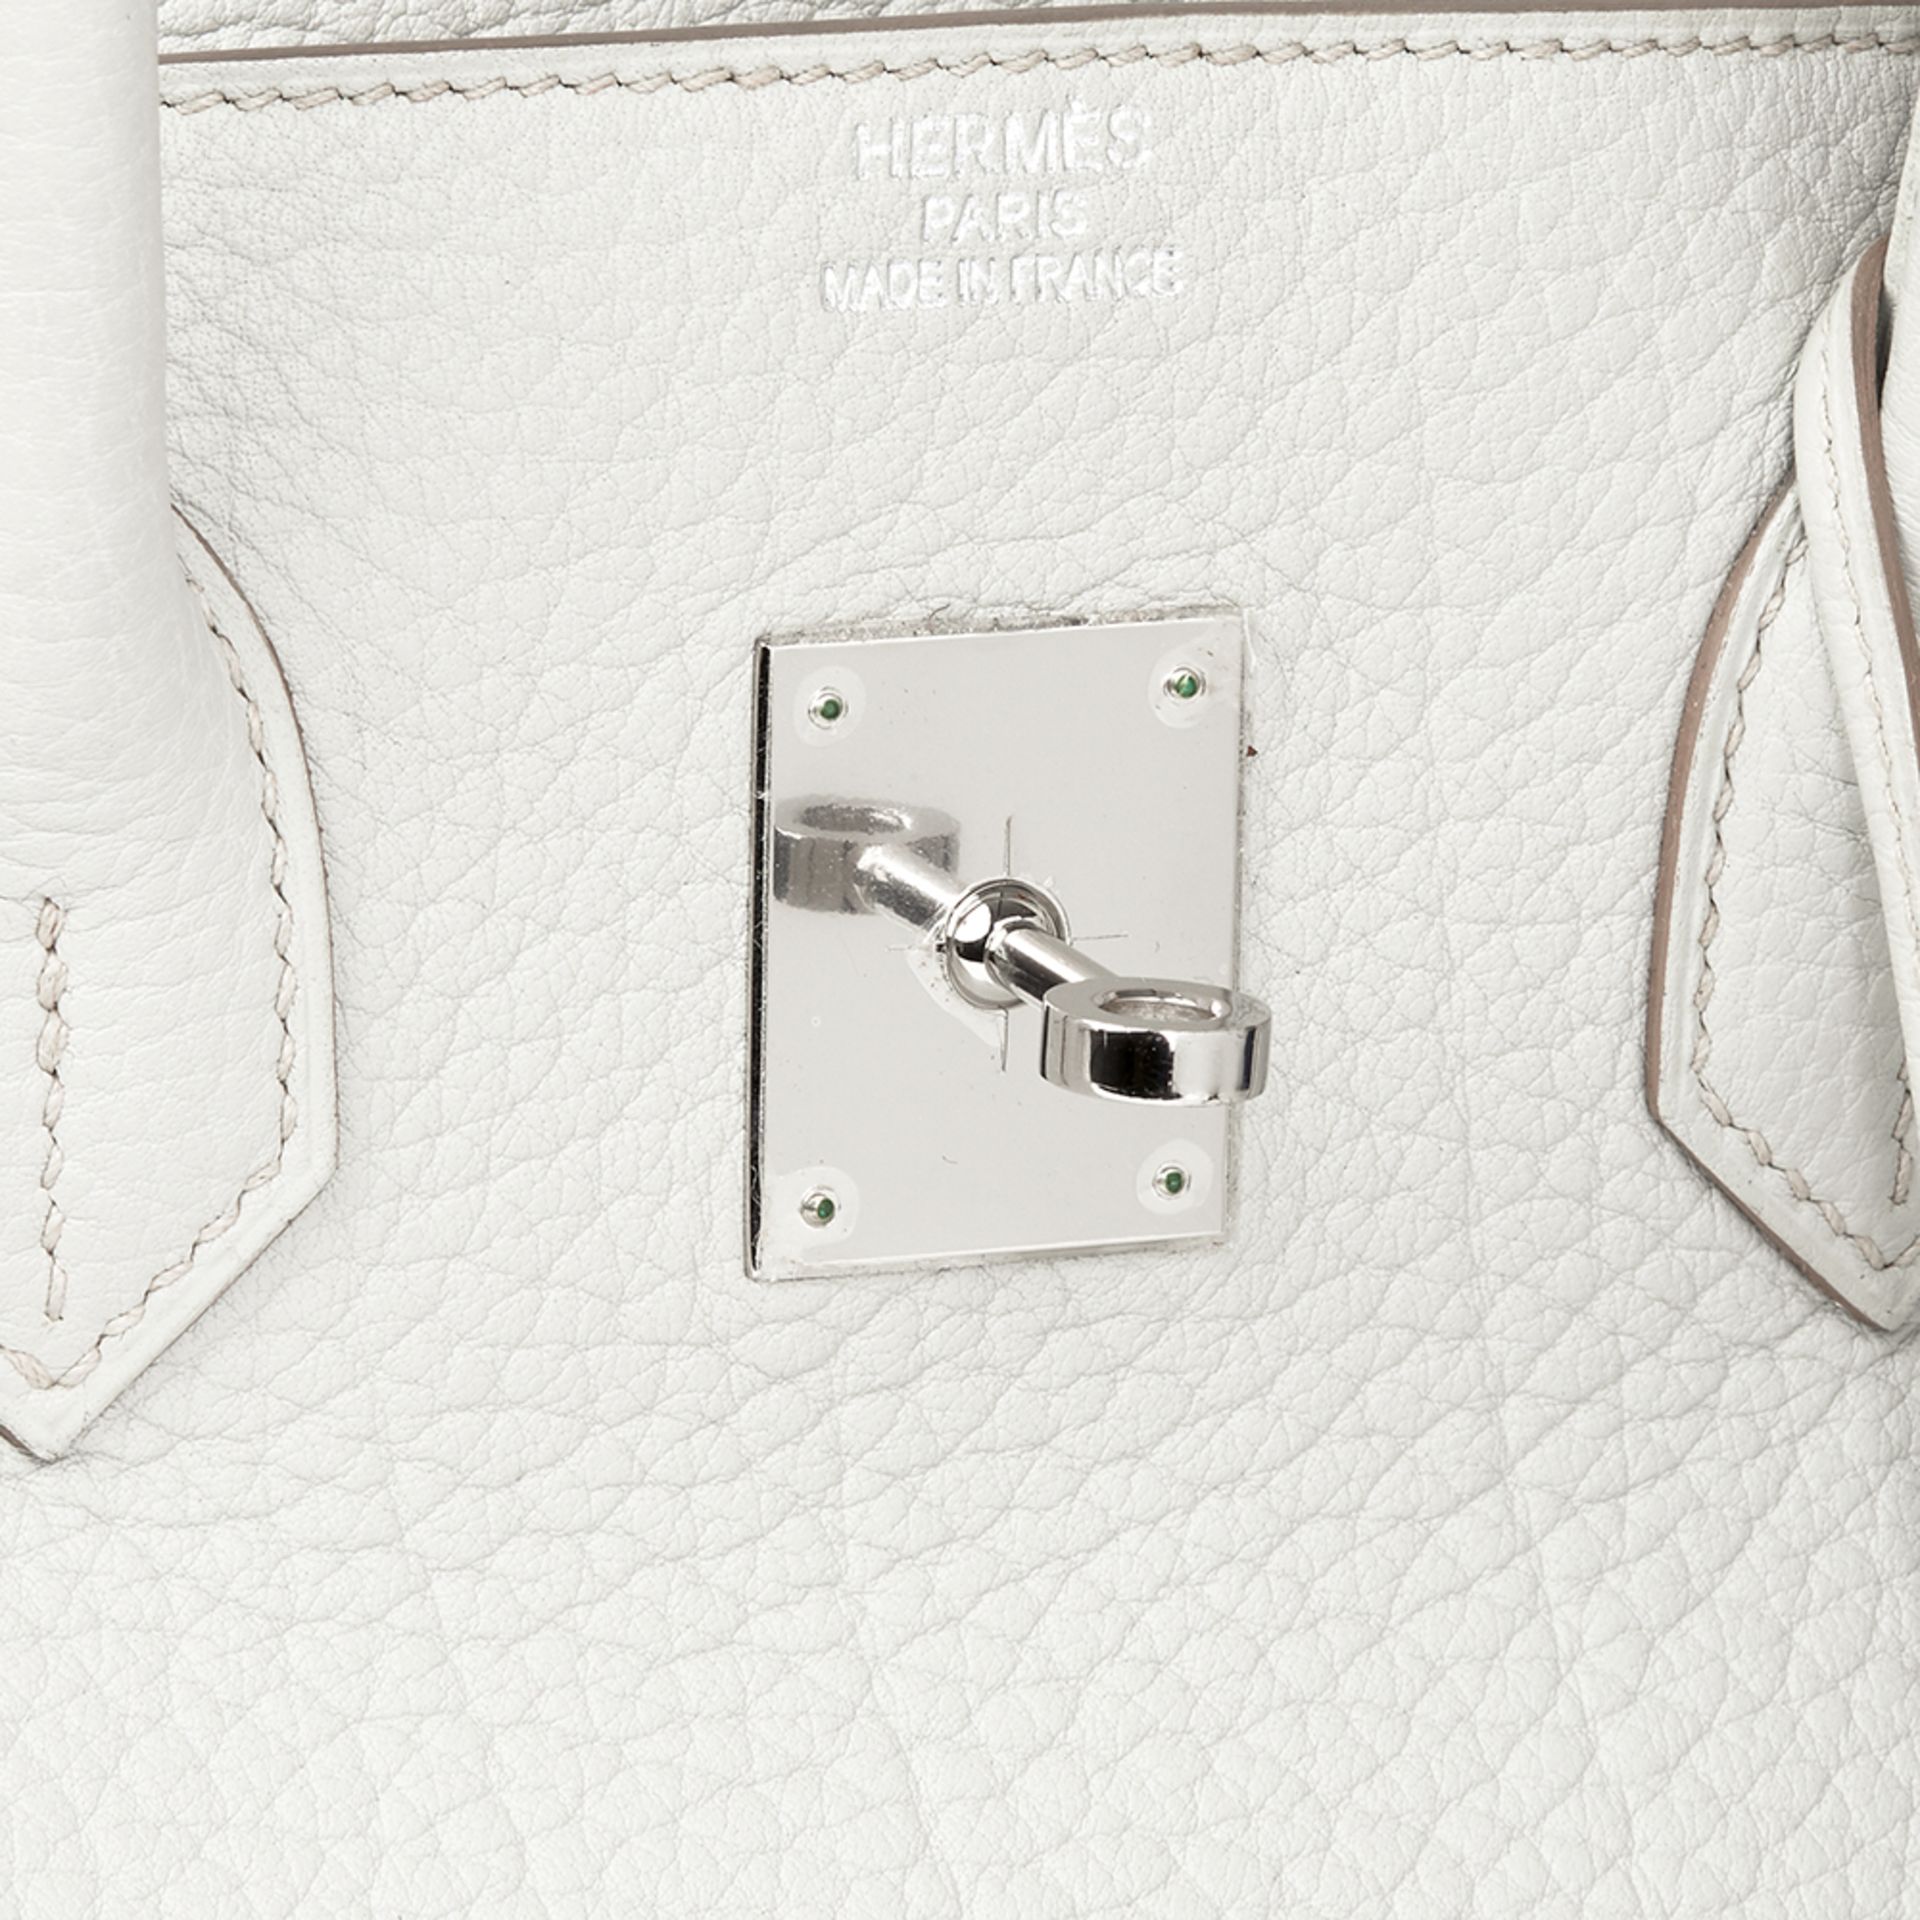 Hermès Gris Perle Fjord Leather Birkin 35cm - Image 7 of 9